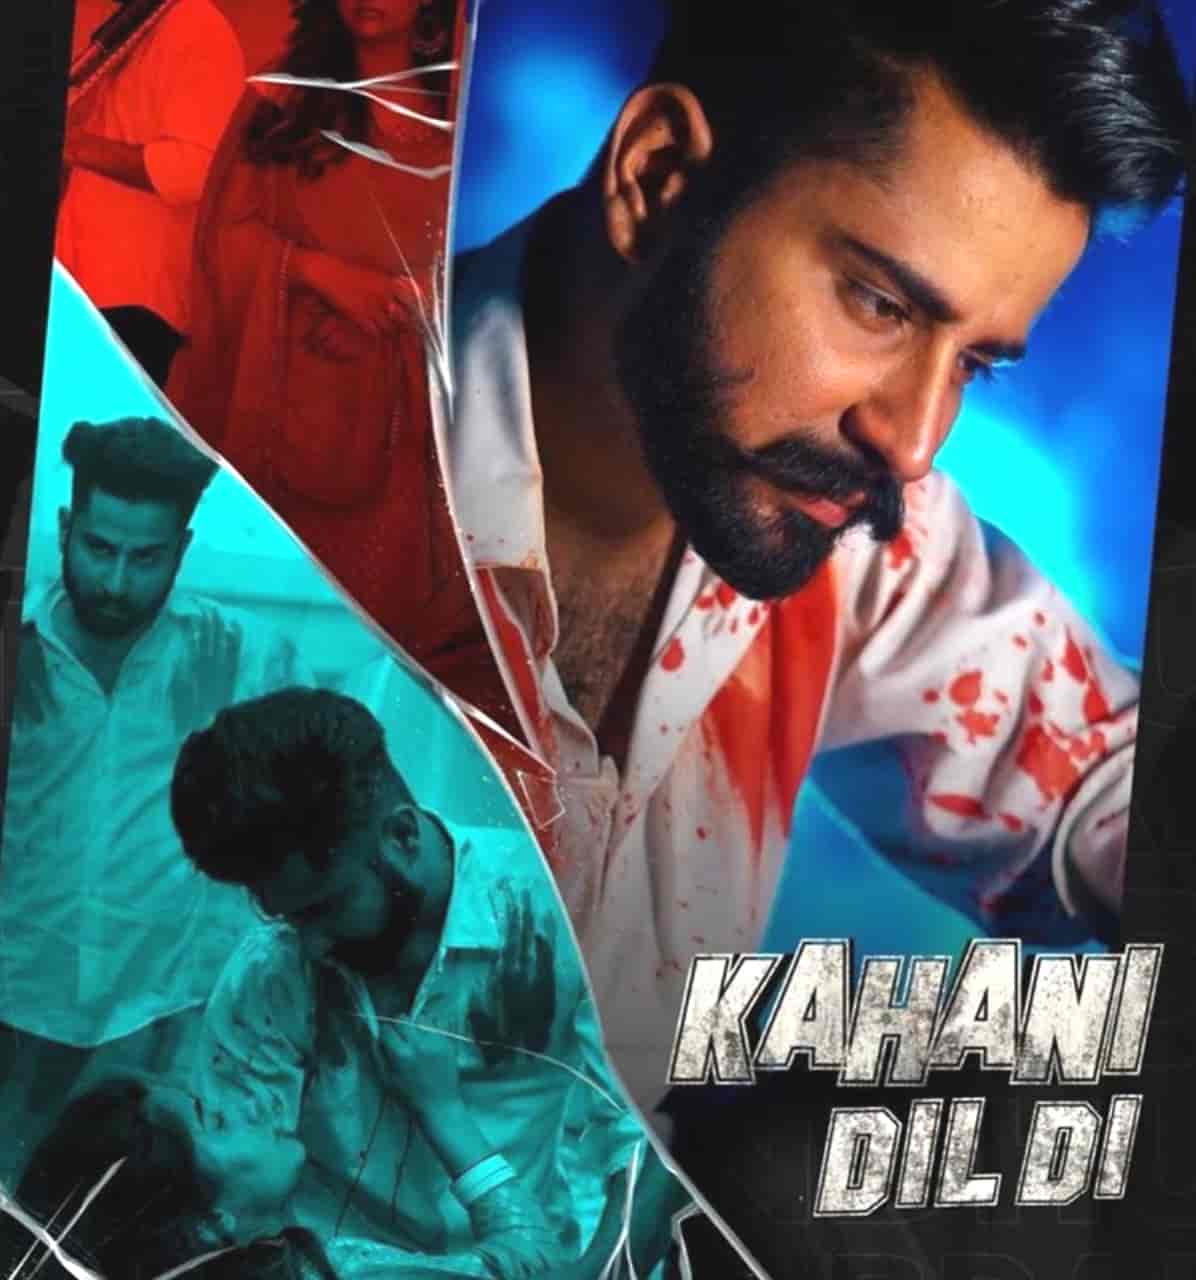 Kahani Dil Di Punjabi Song Image Features Varinder Brar